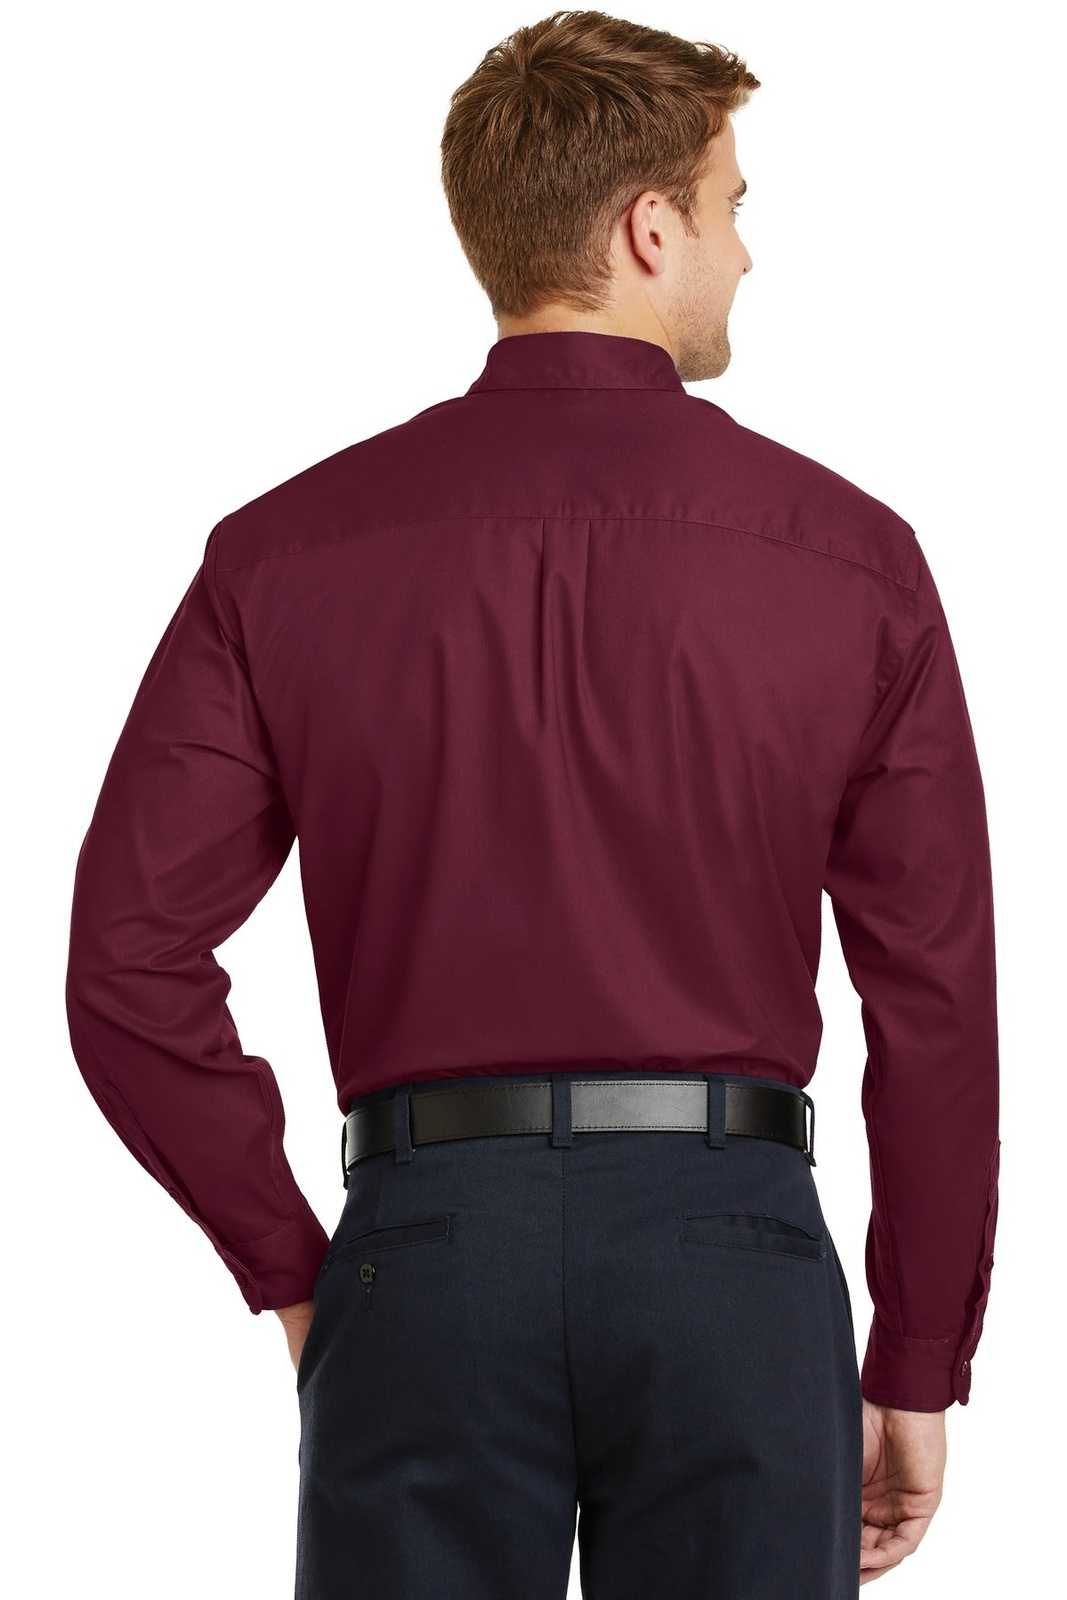 CornerStone SP17 Long Sleeve Superpro Twill Shirt - Burgundy - HIT a Double - 2